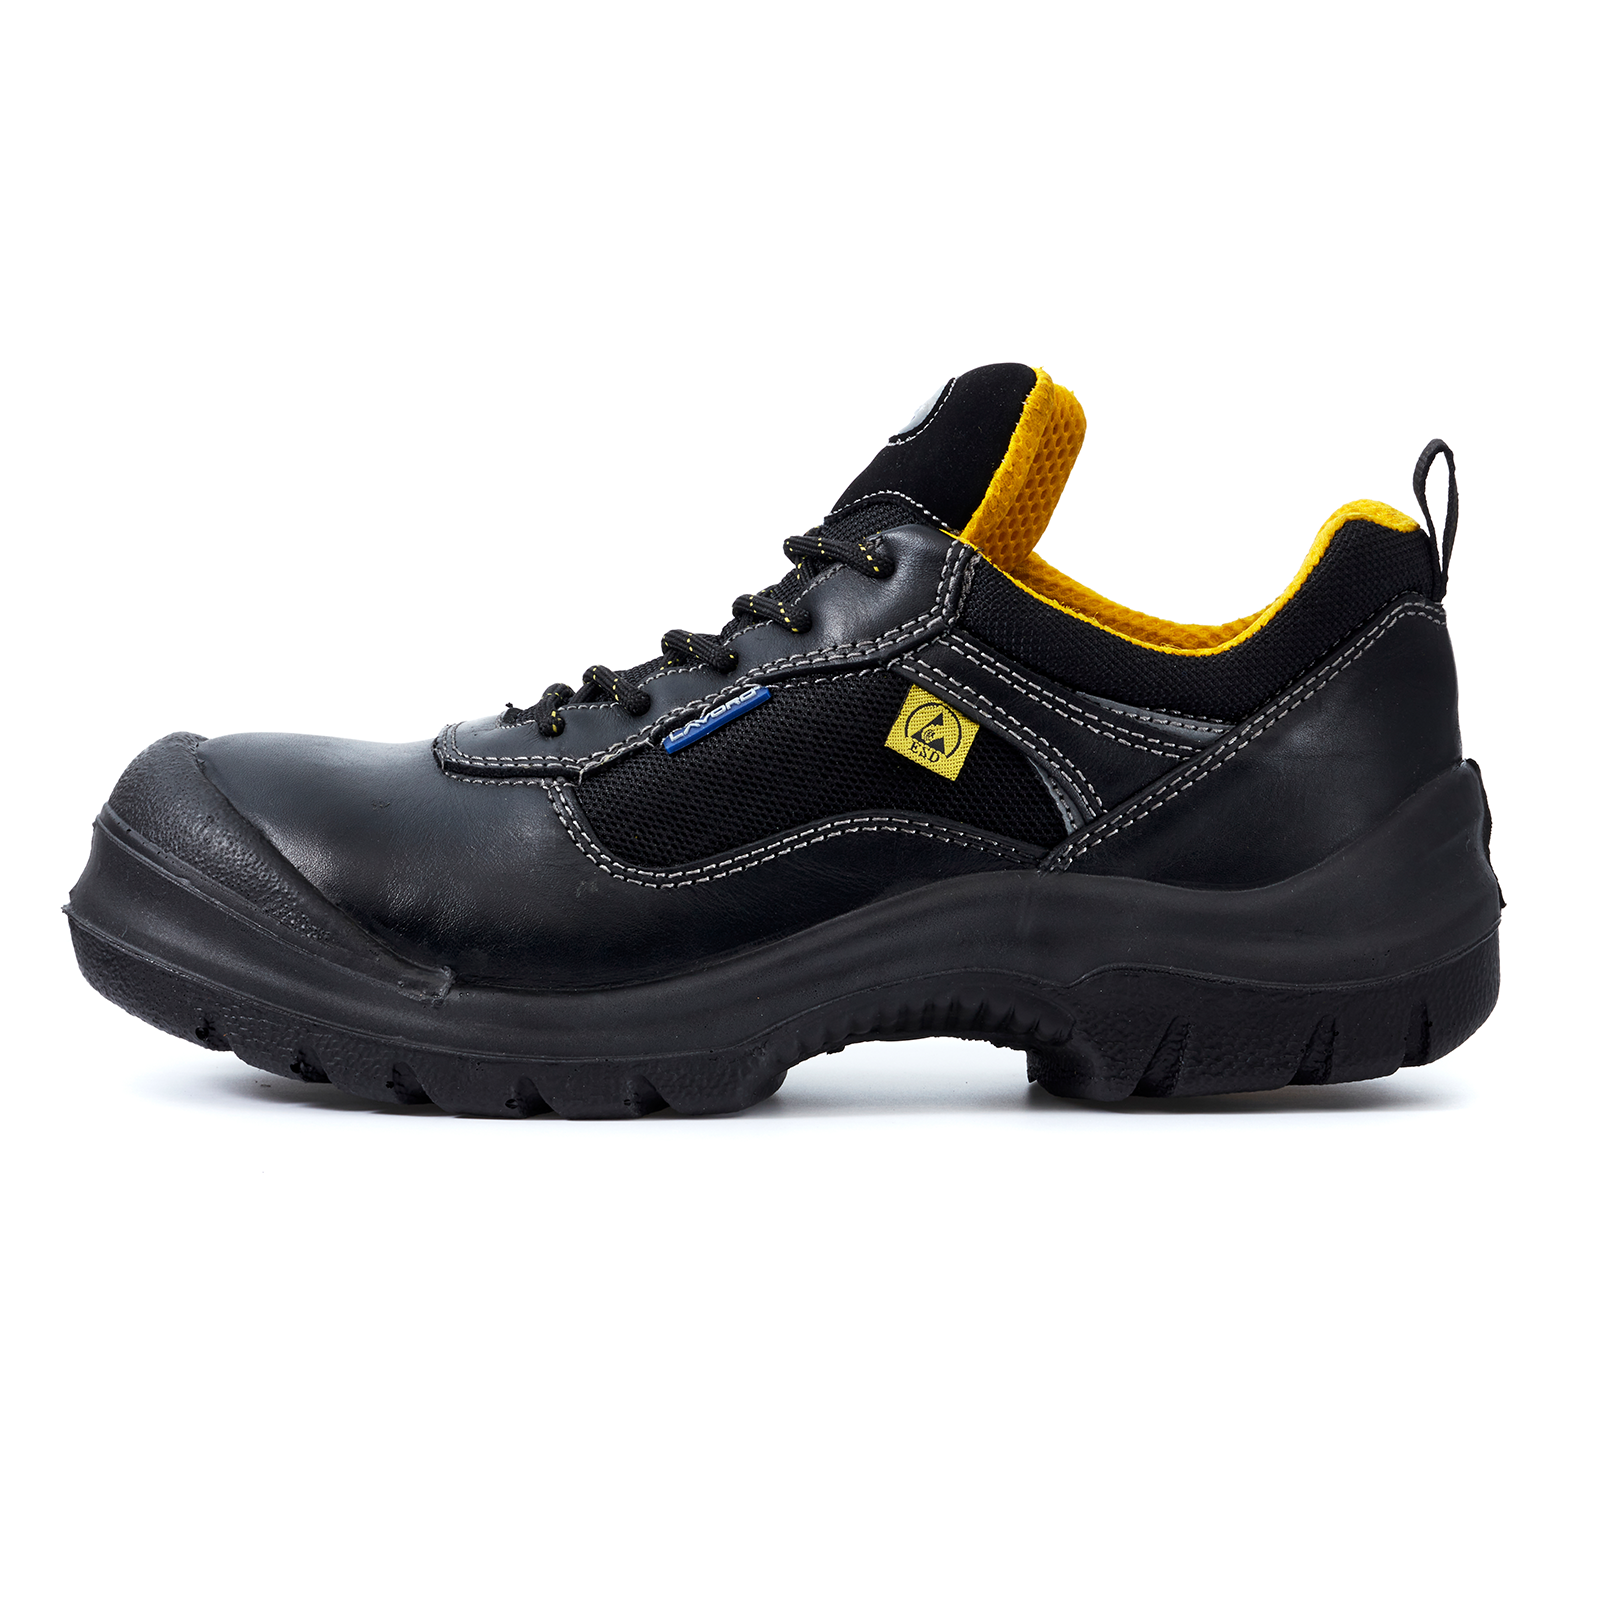 Safety shoe - Art 6255.20